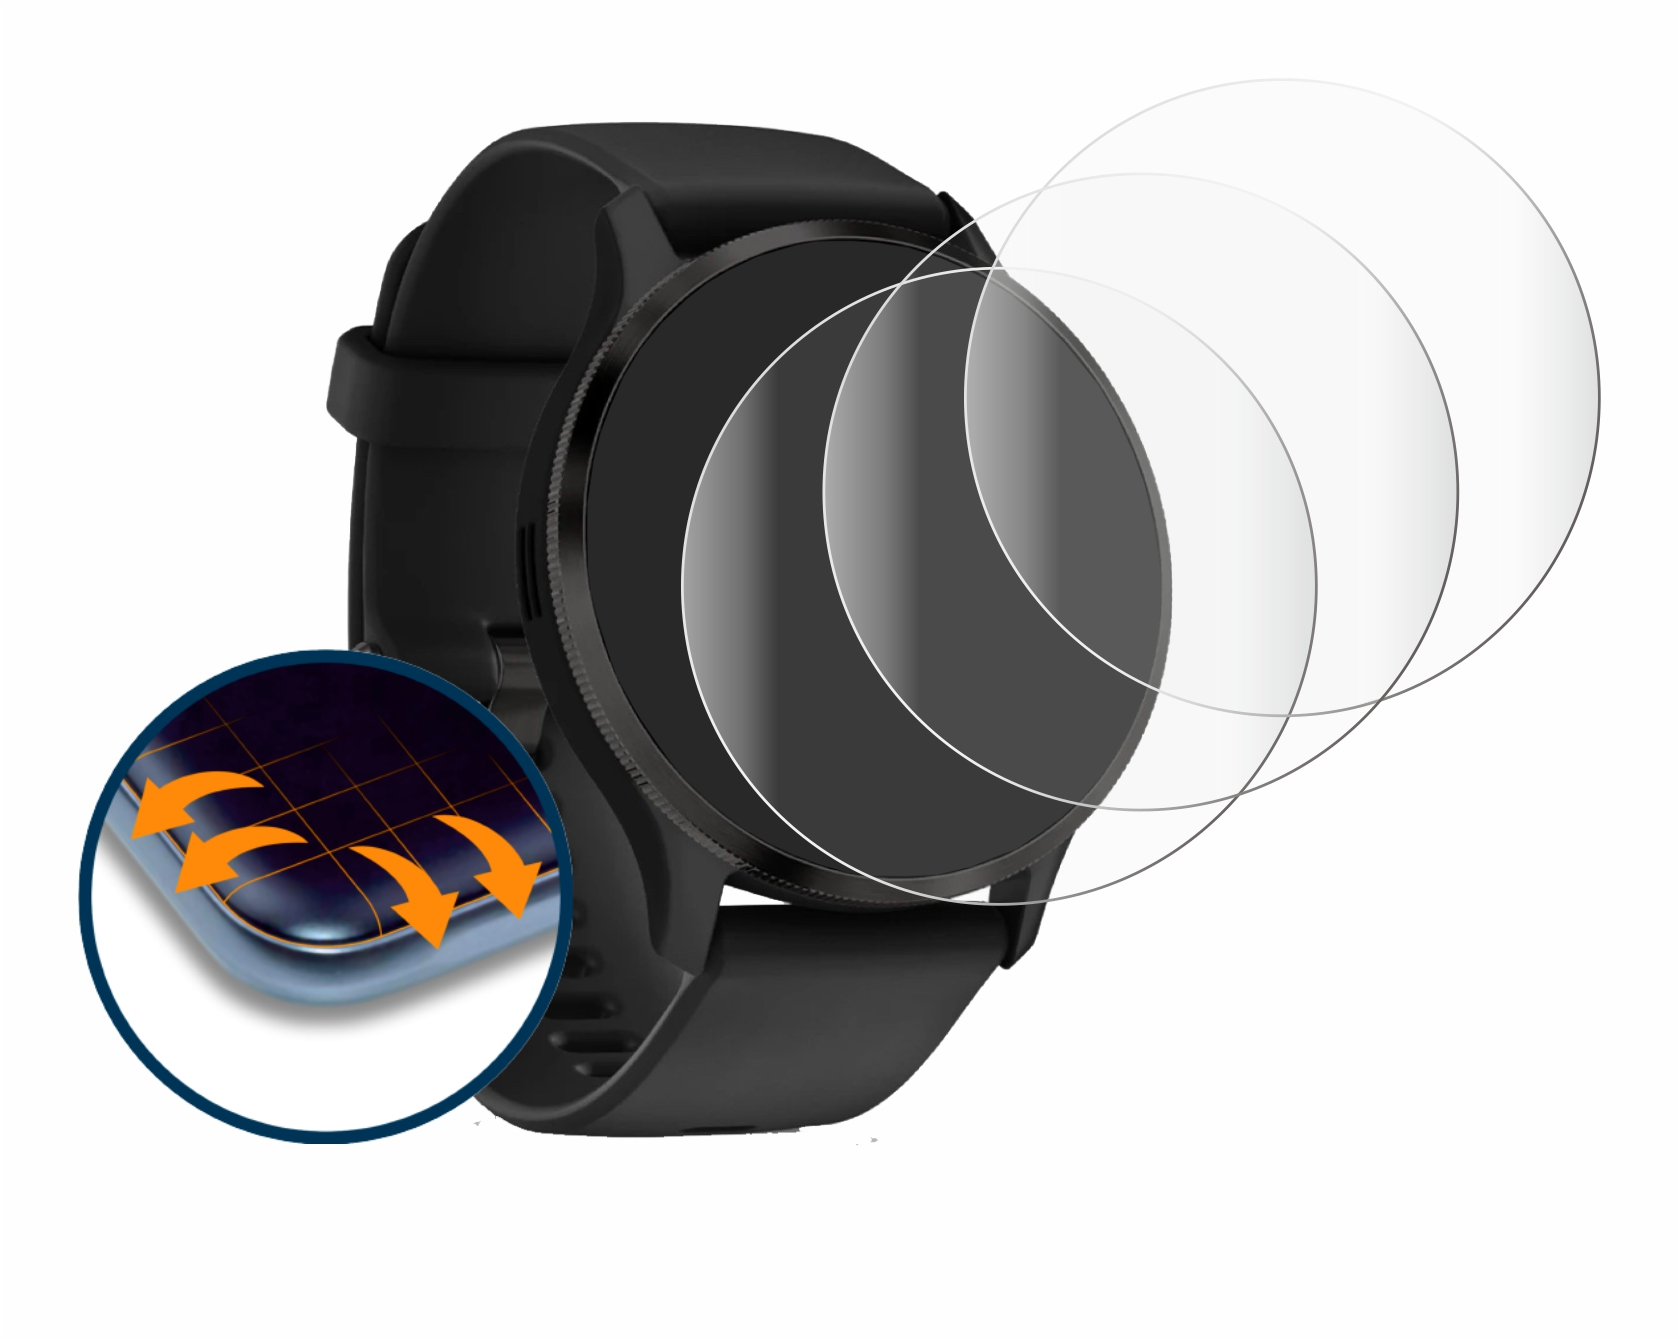 Flex 3S) Schutzfolie(für Venu Garmin SAVVIES Full-Cover 4x Curved 3D